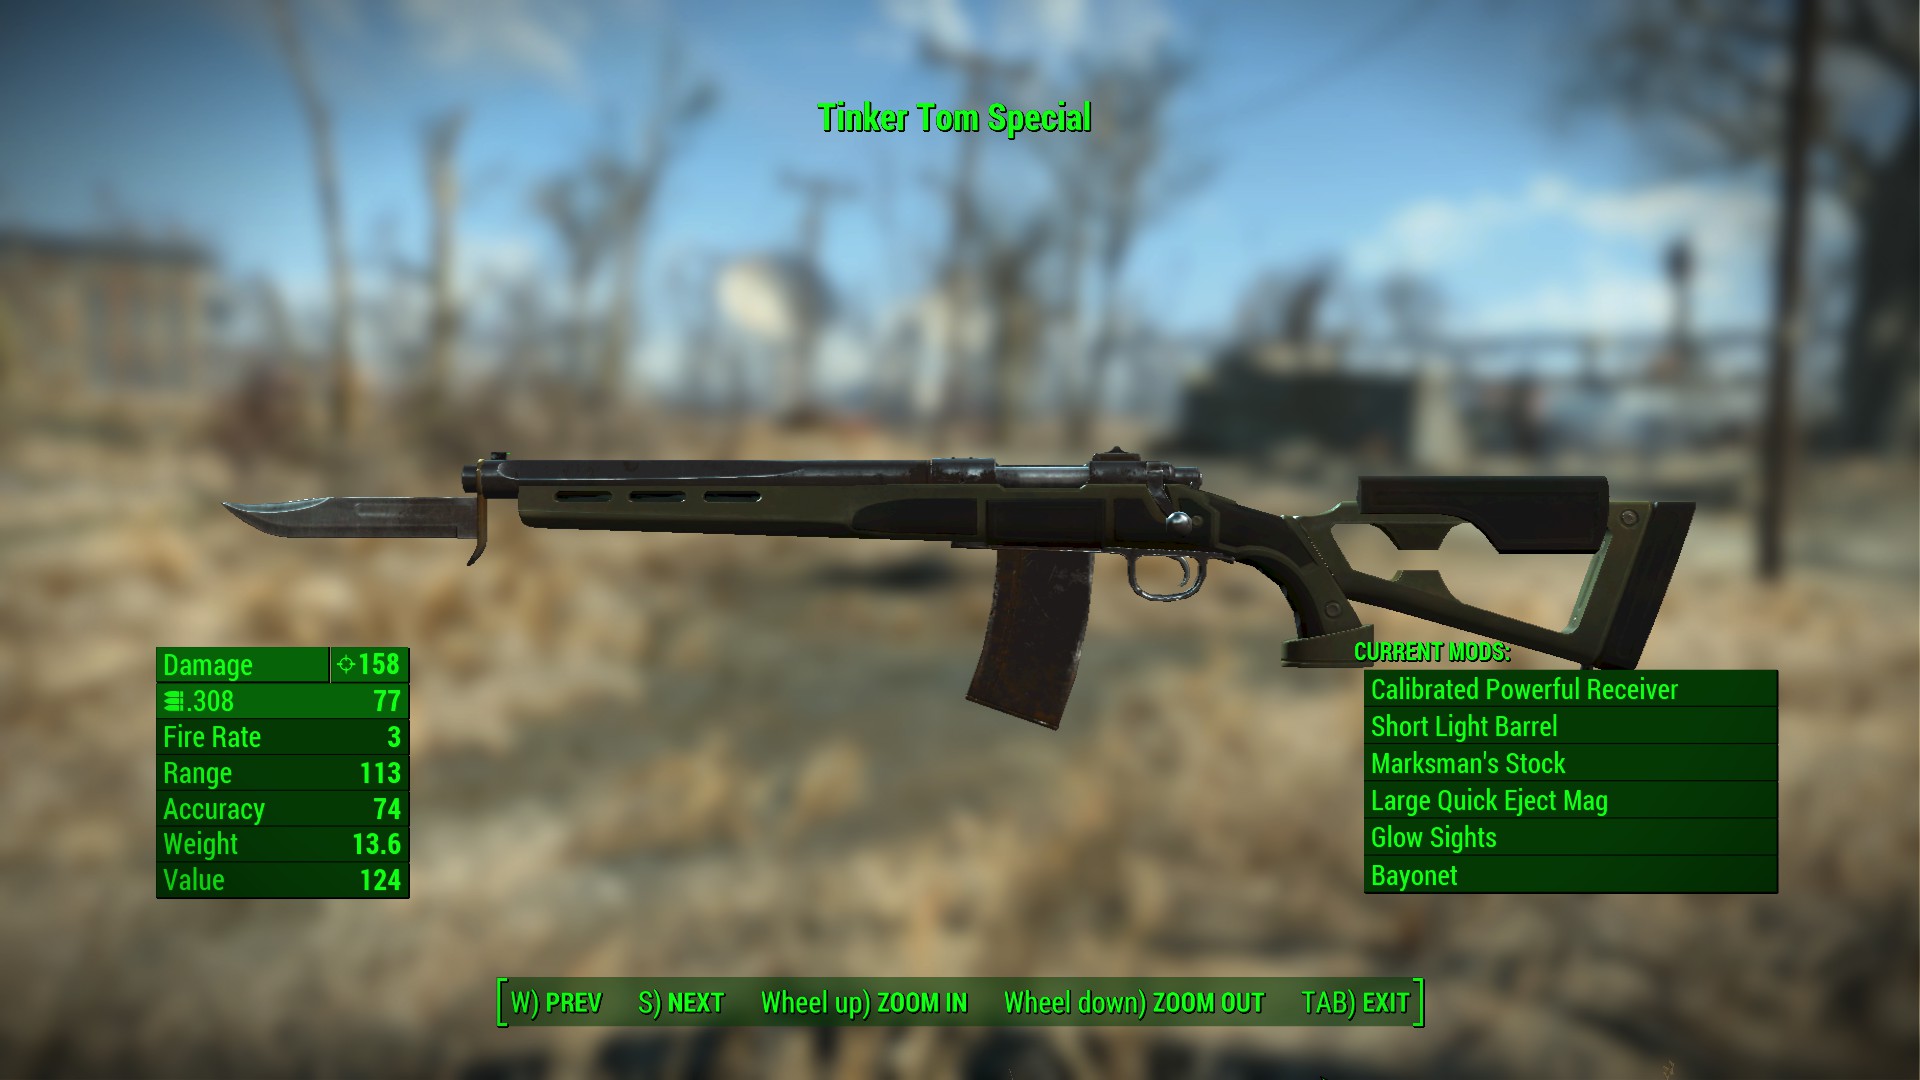 Arma speciale di Fallout 4 Tinker Tom